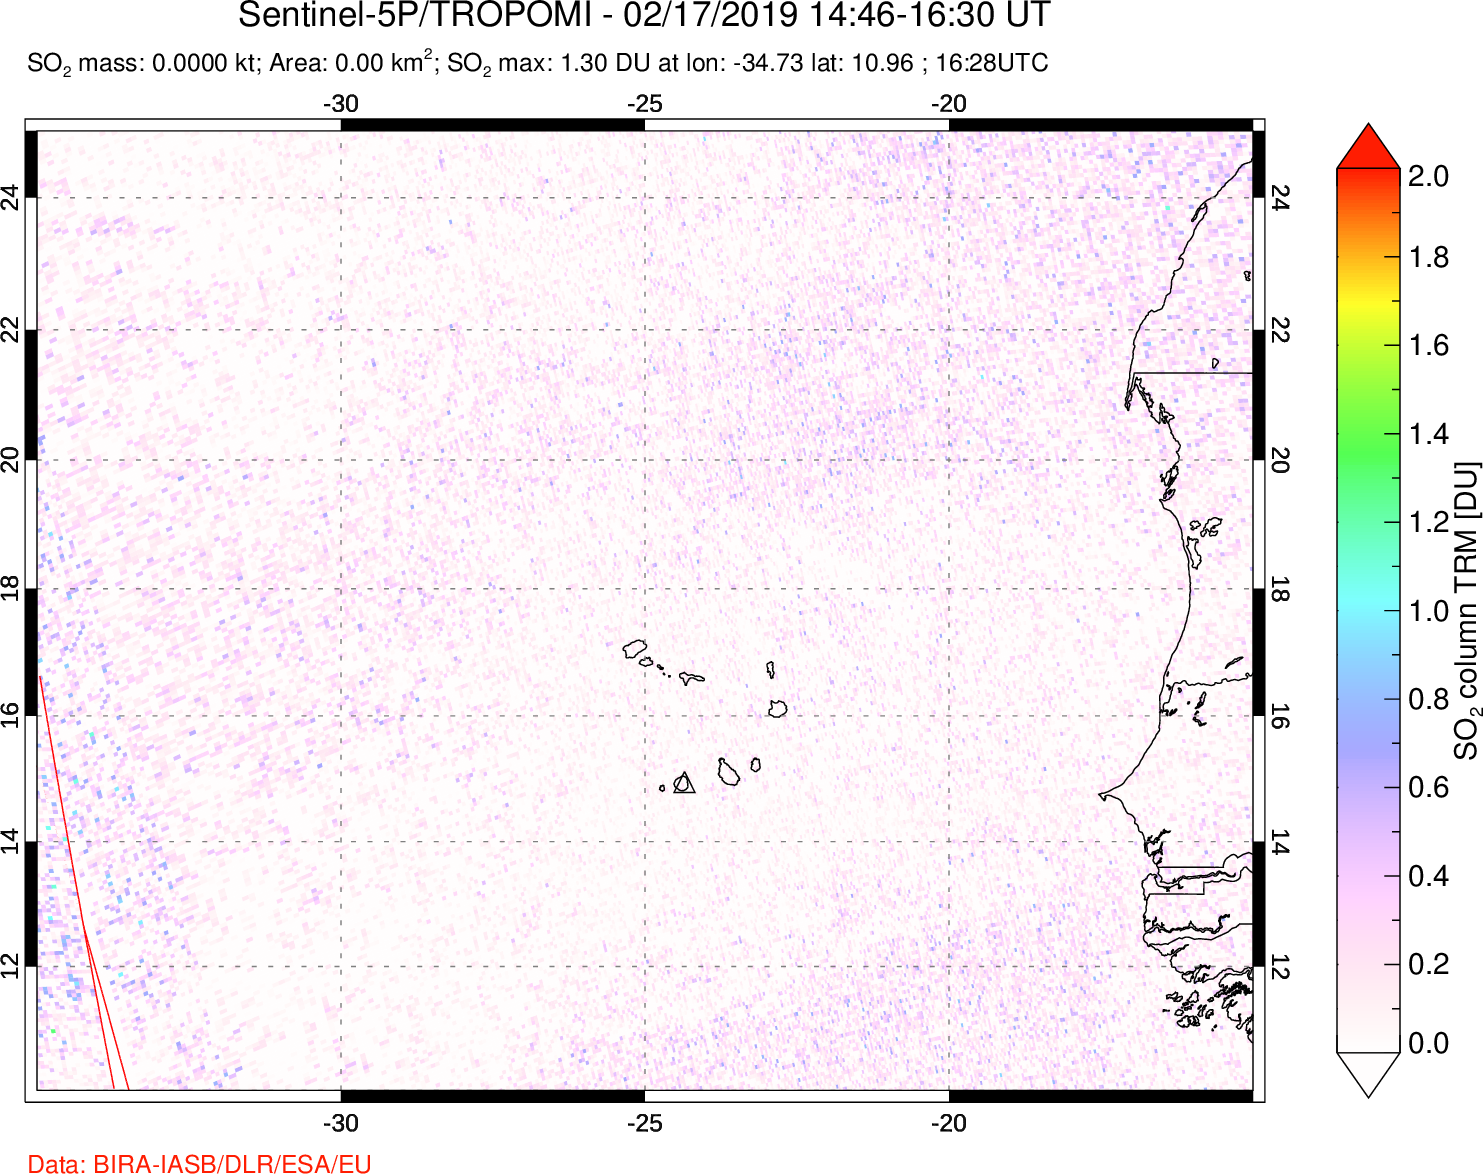 A sulfur dioxide image over Cape Verde Islands on Feb 17, 2019.